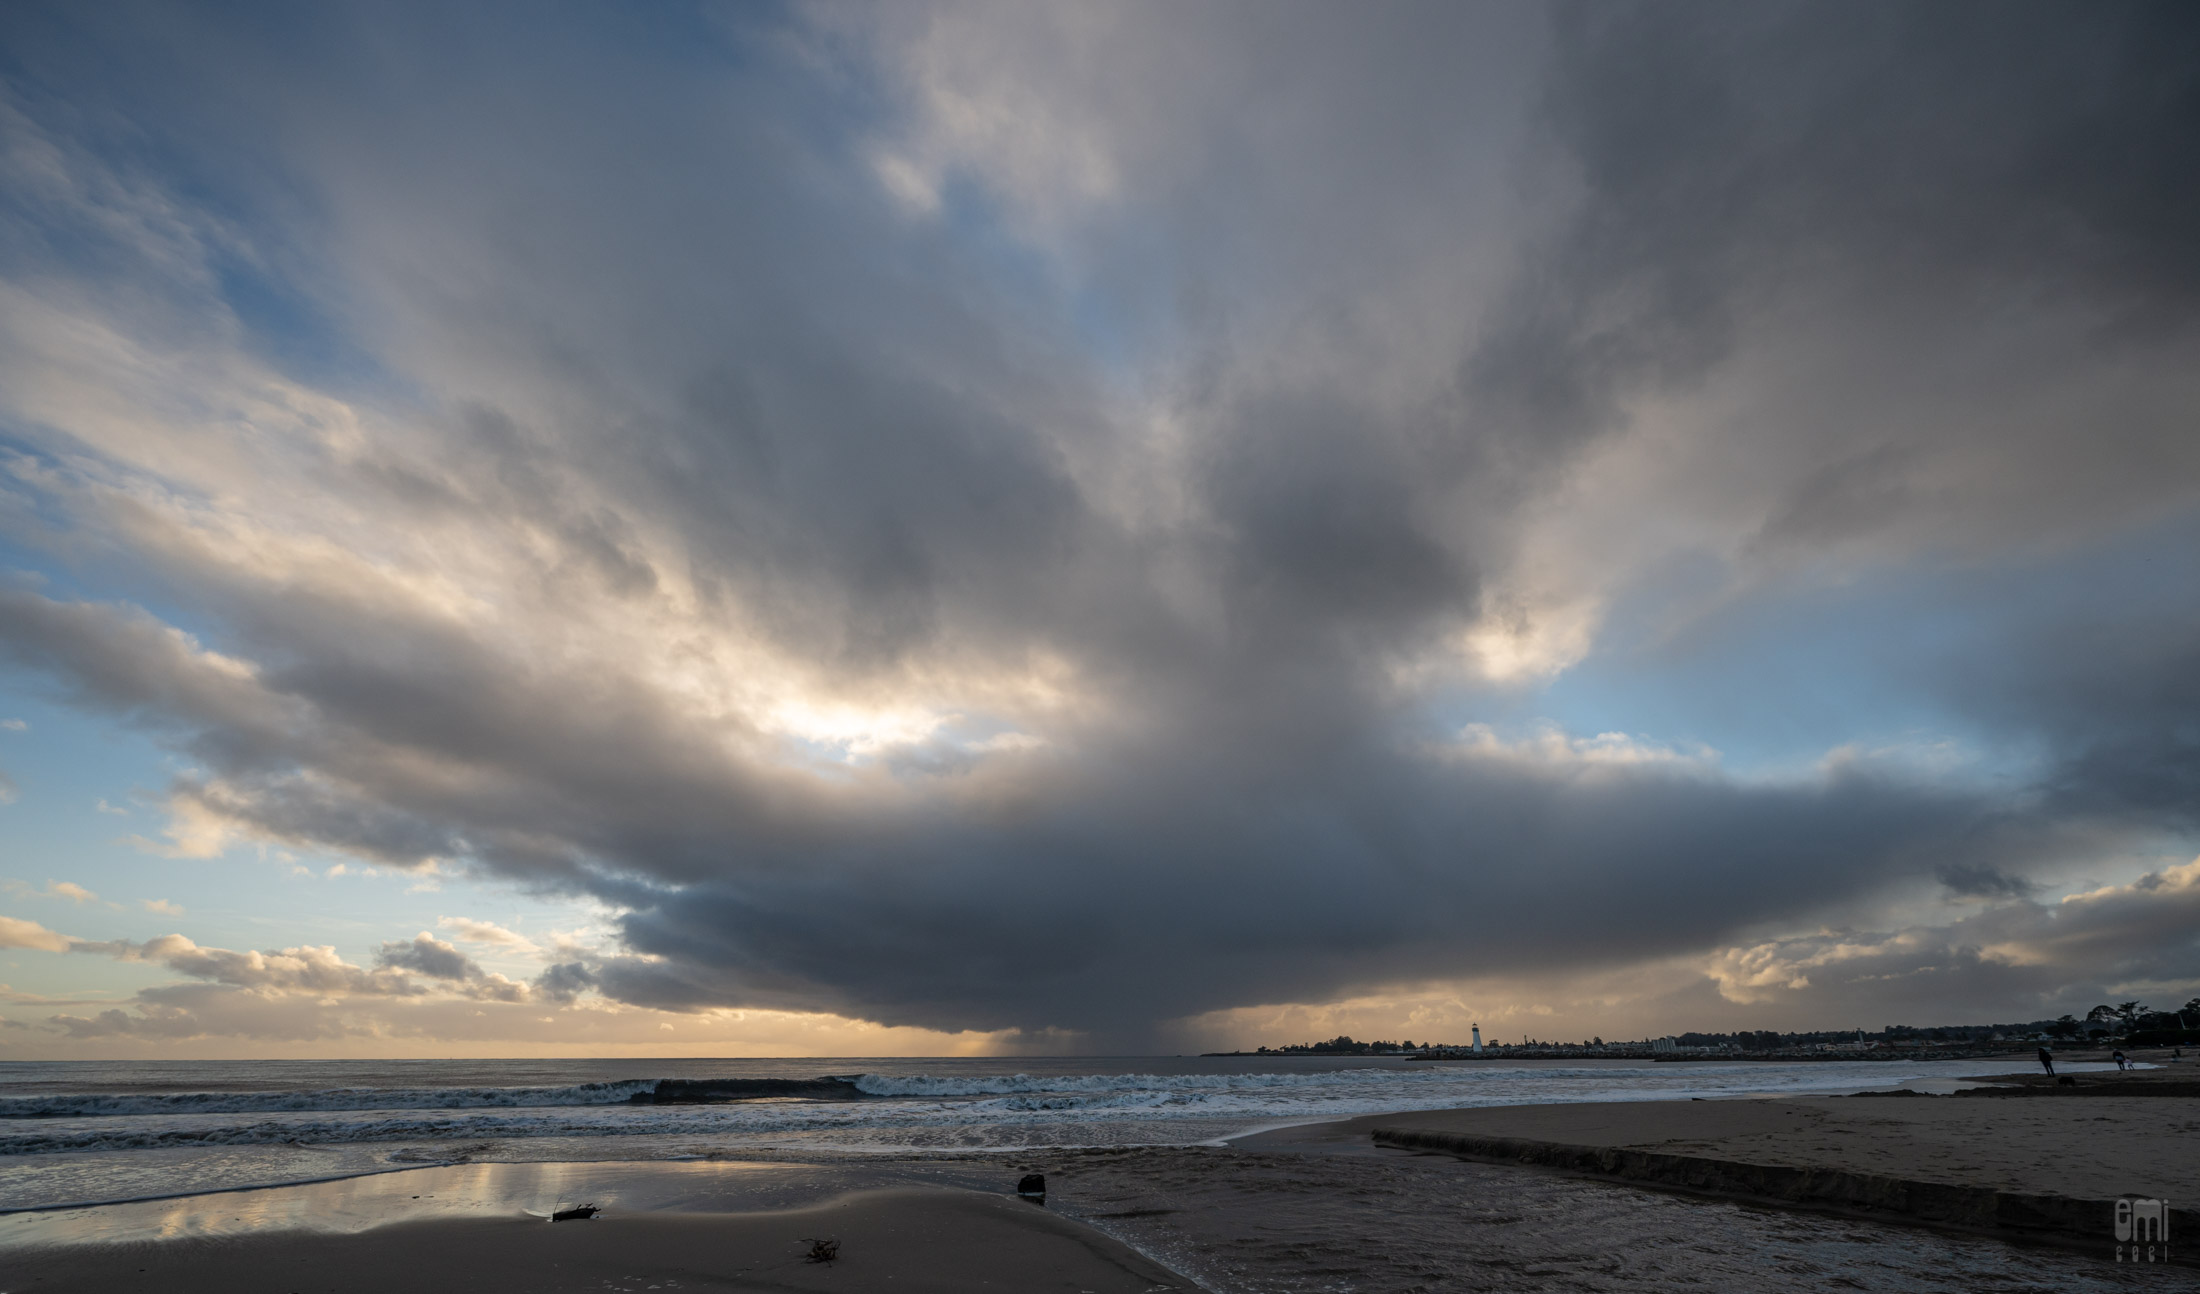 20211227 Sunset Cloud Rain at Santa Cruz Breakwater Lighthouse Walton photo by emi